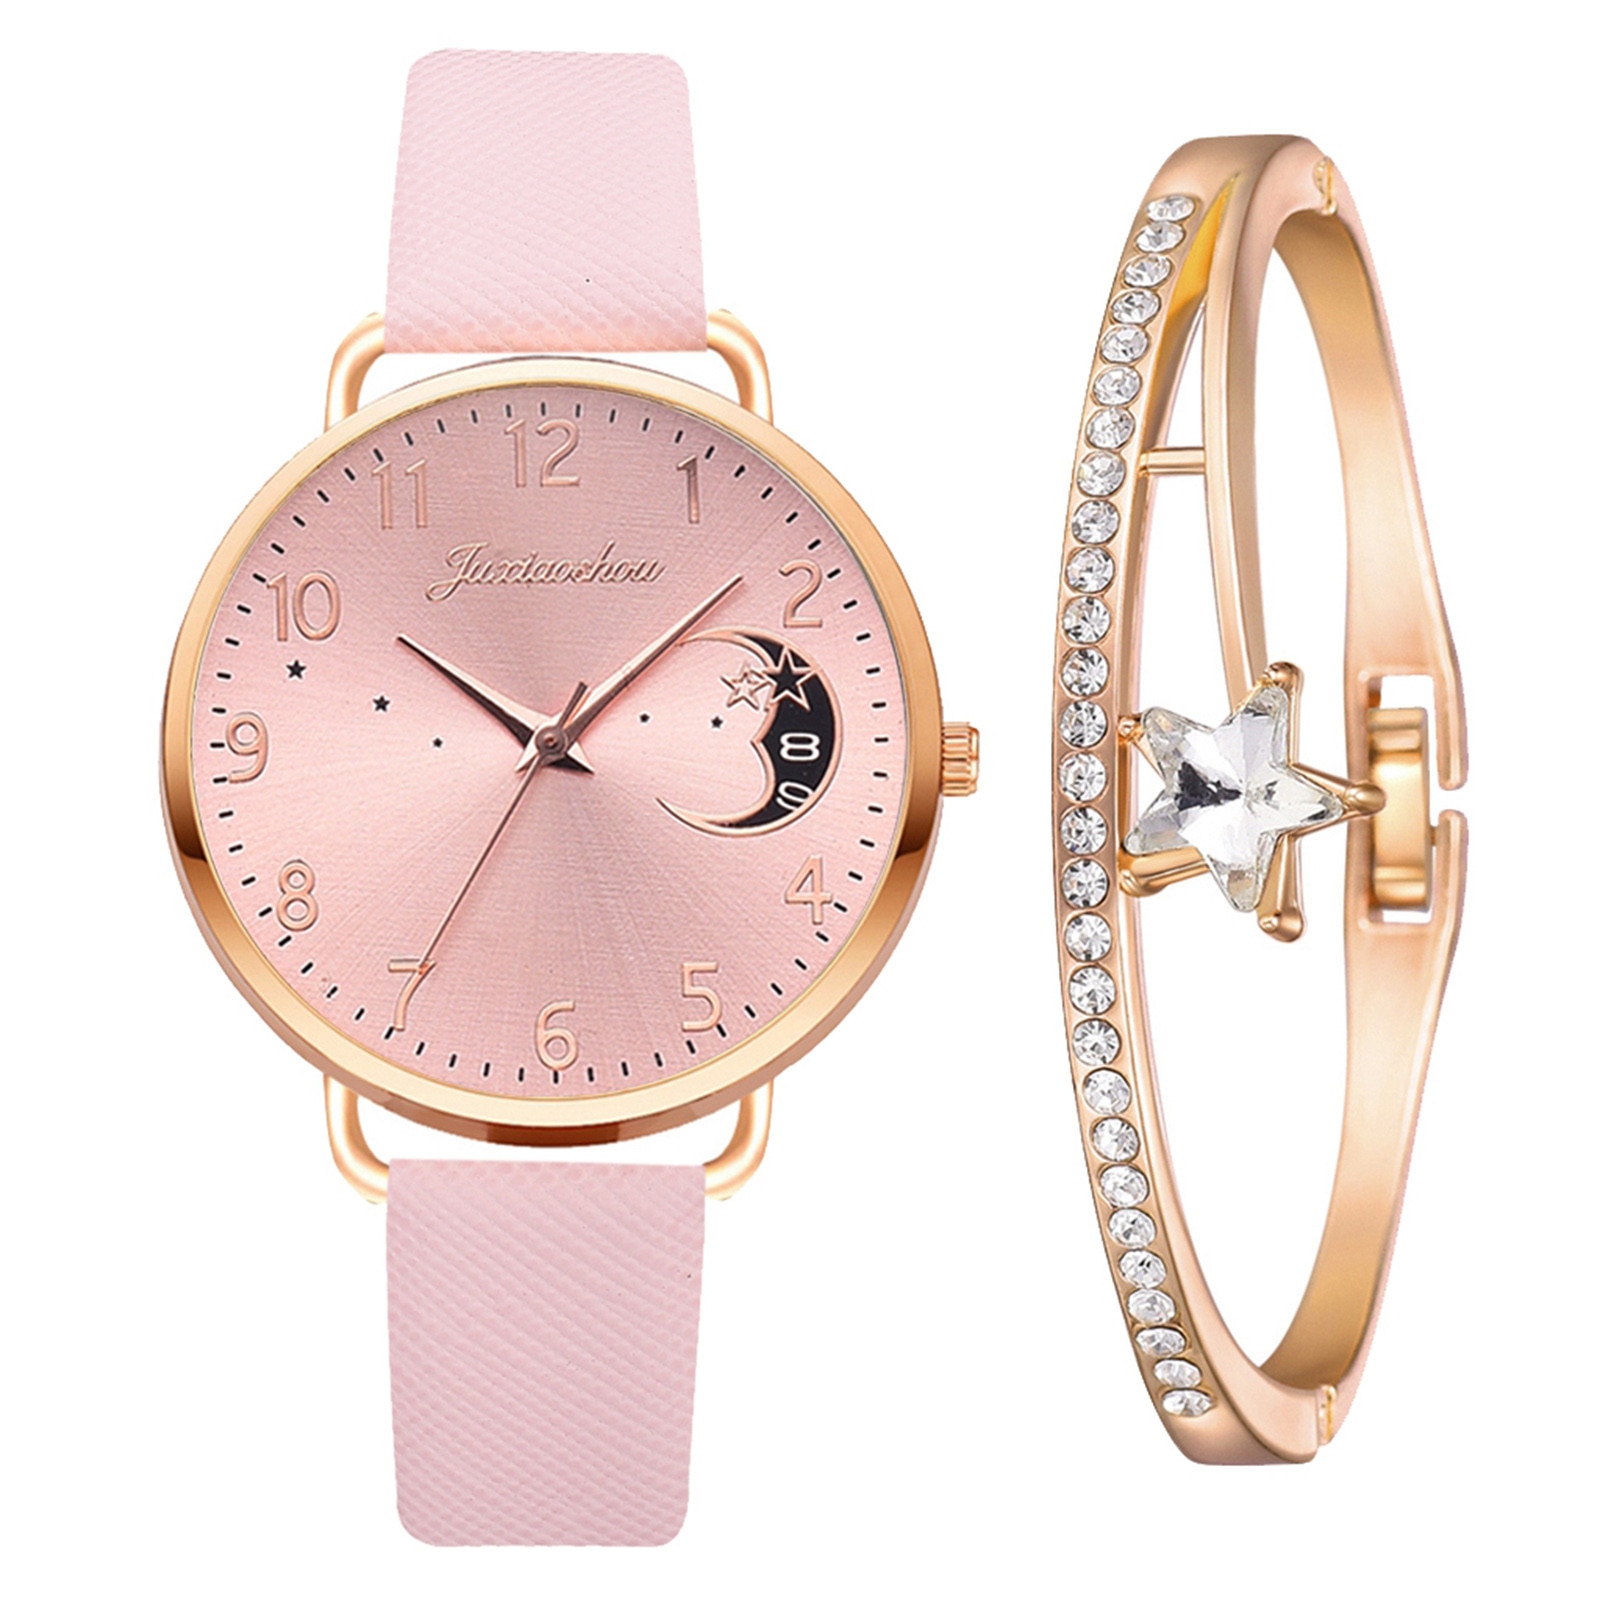 Sleek Minimalist Fashion With Strap Dial Women's Quartz Watch Gift Watch Casual Women's Watch Romantic Starry Sky Watch